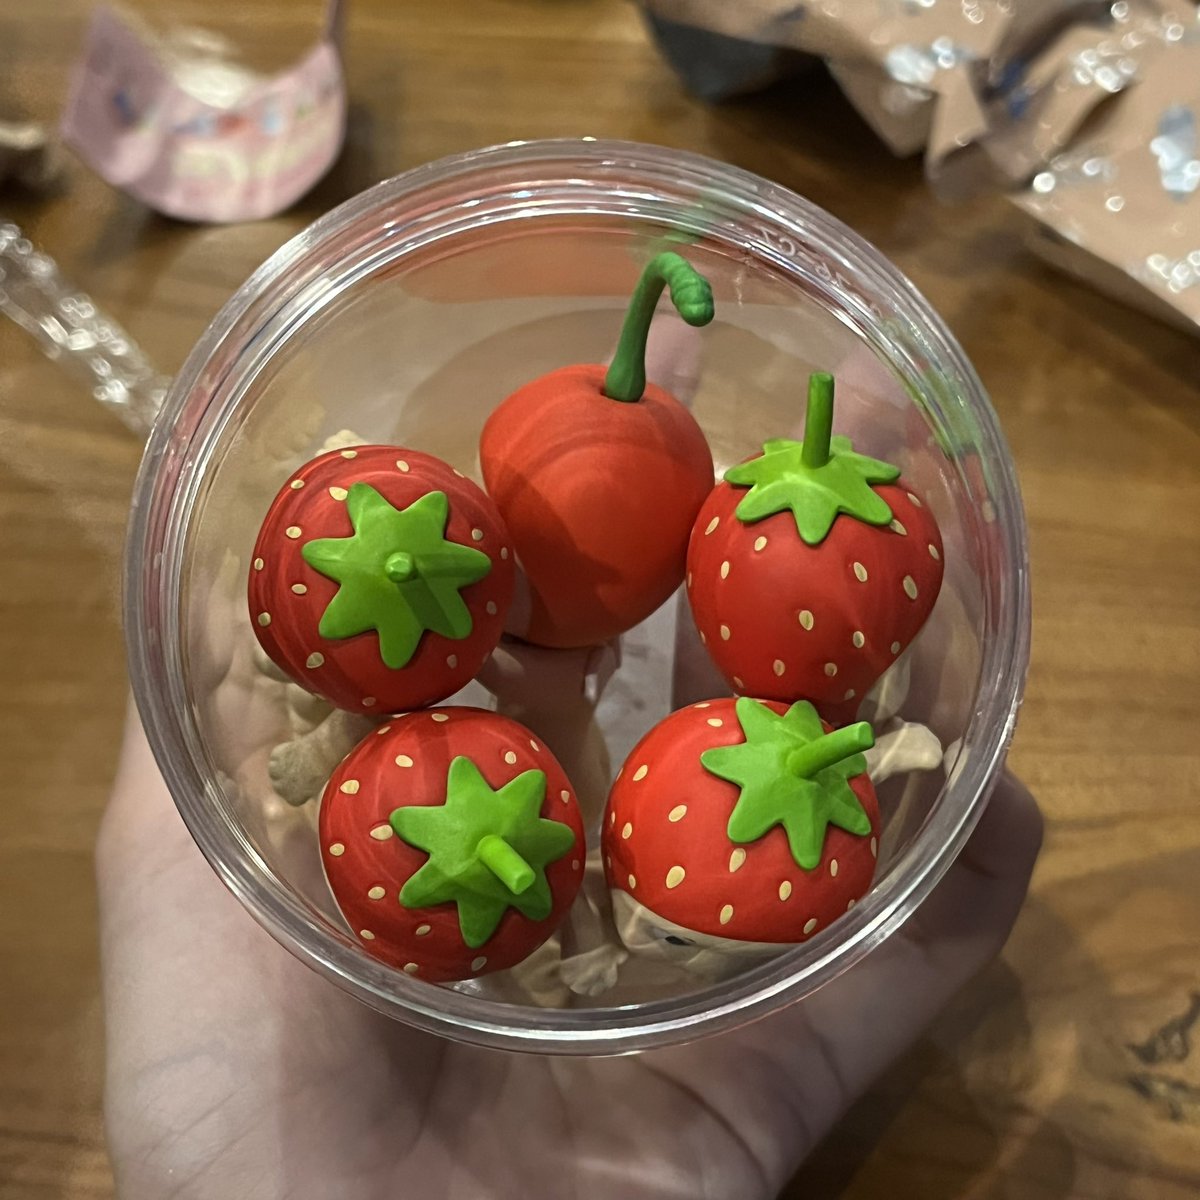 Strawberries :D